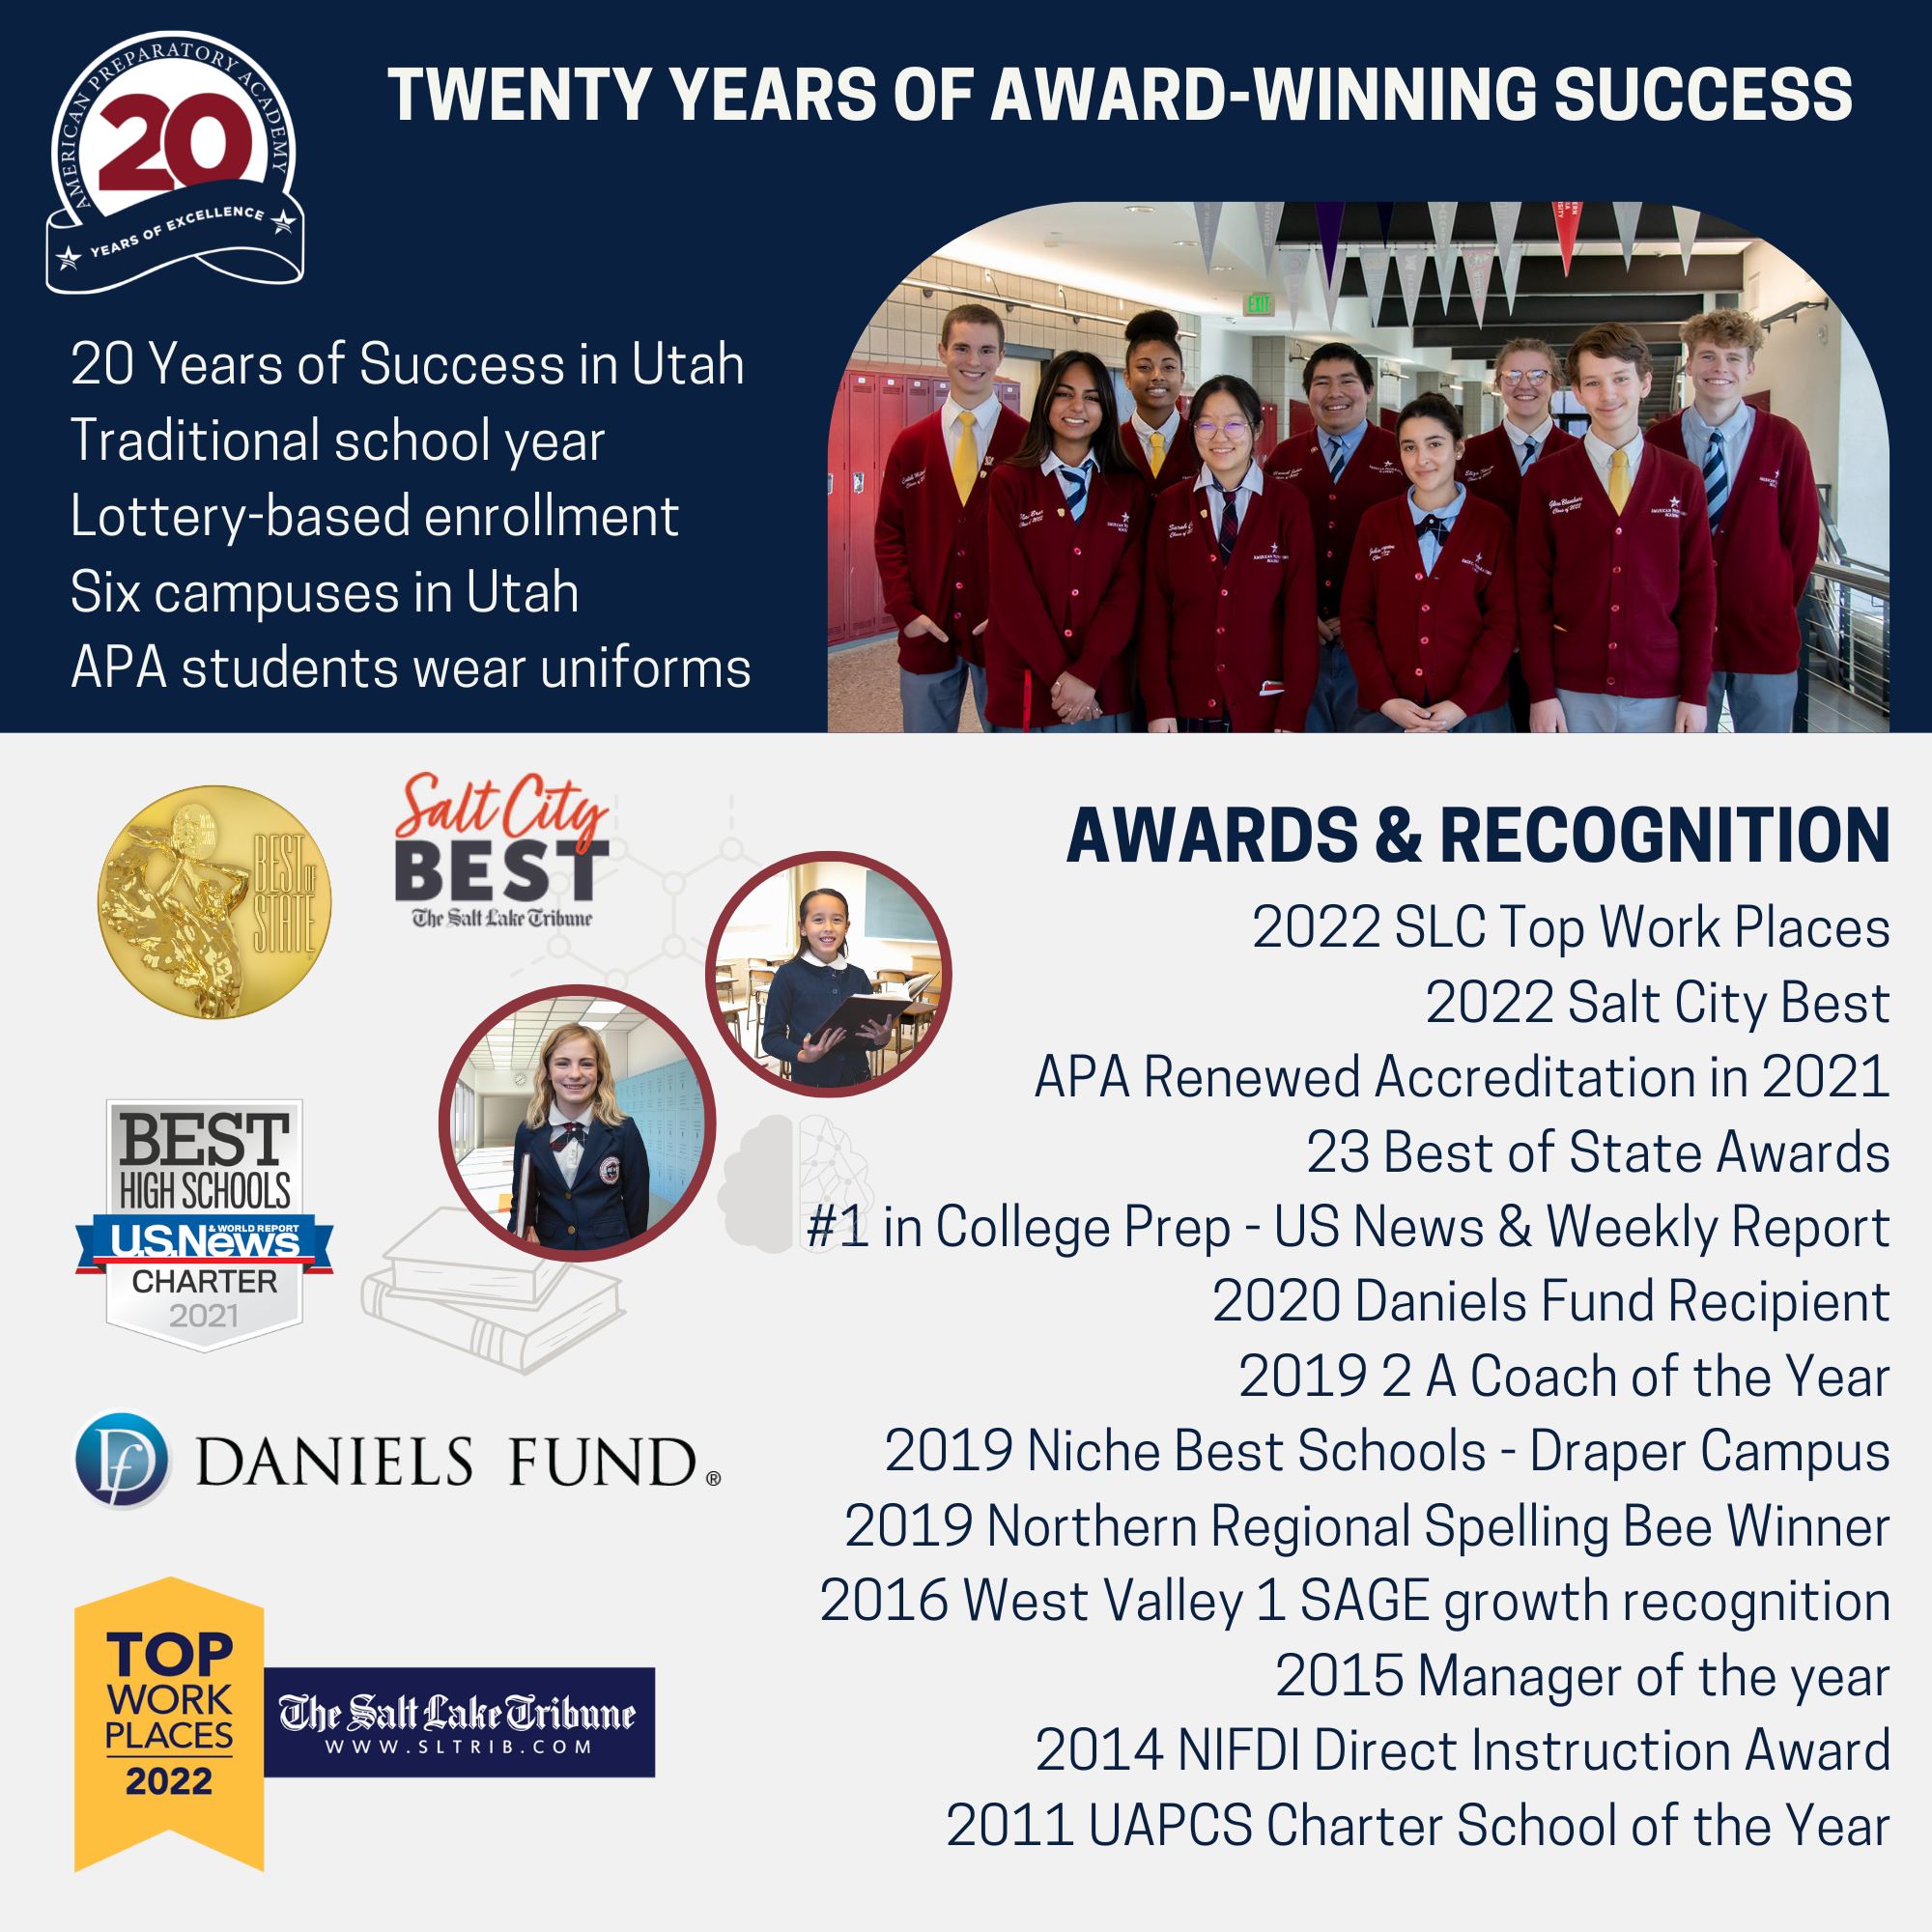 Twenty years of Award-Winning Success